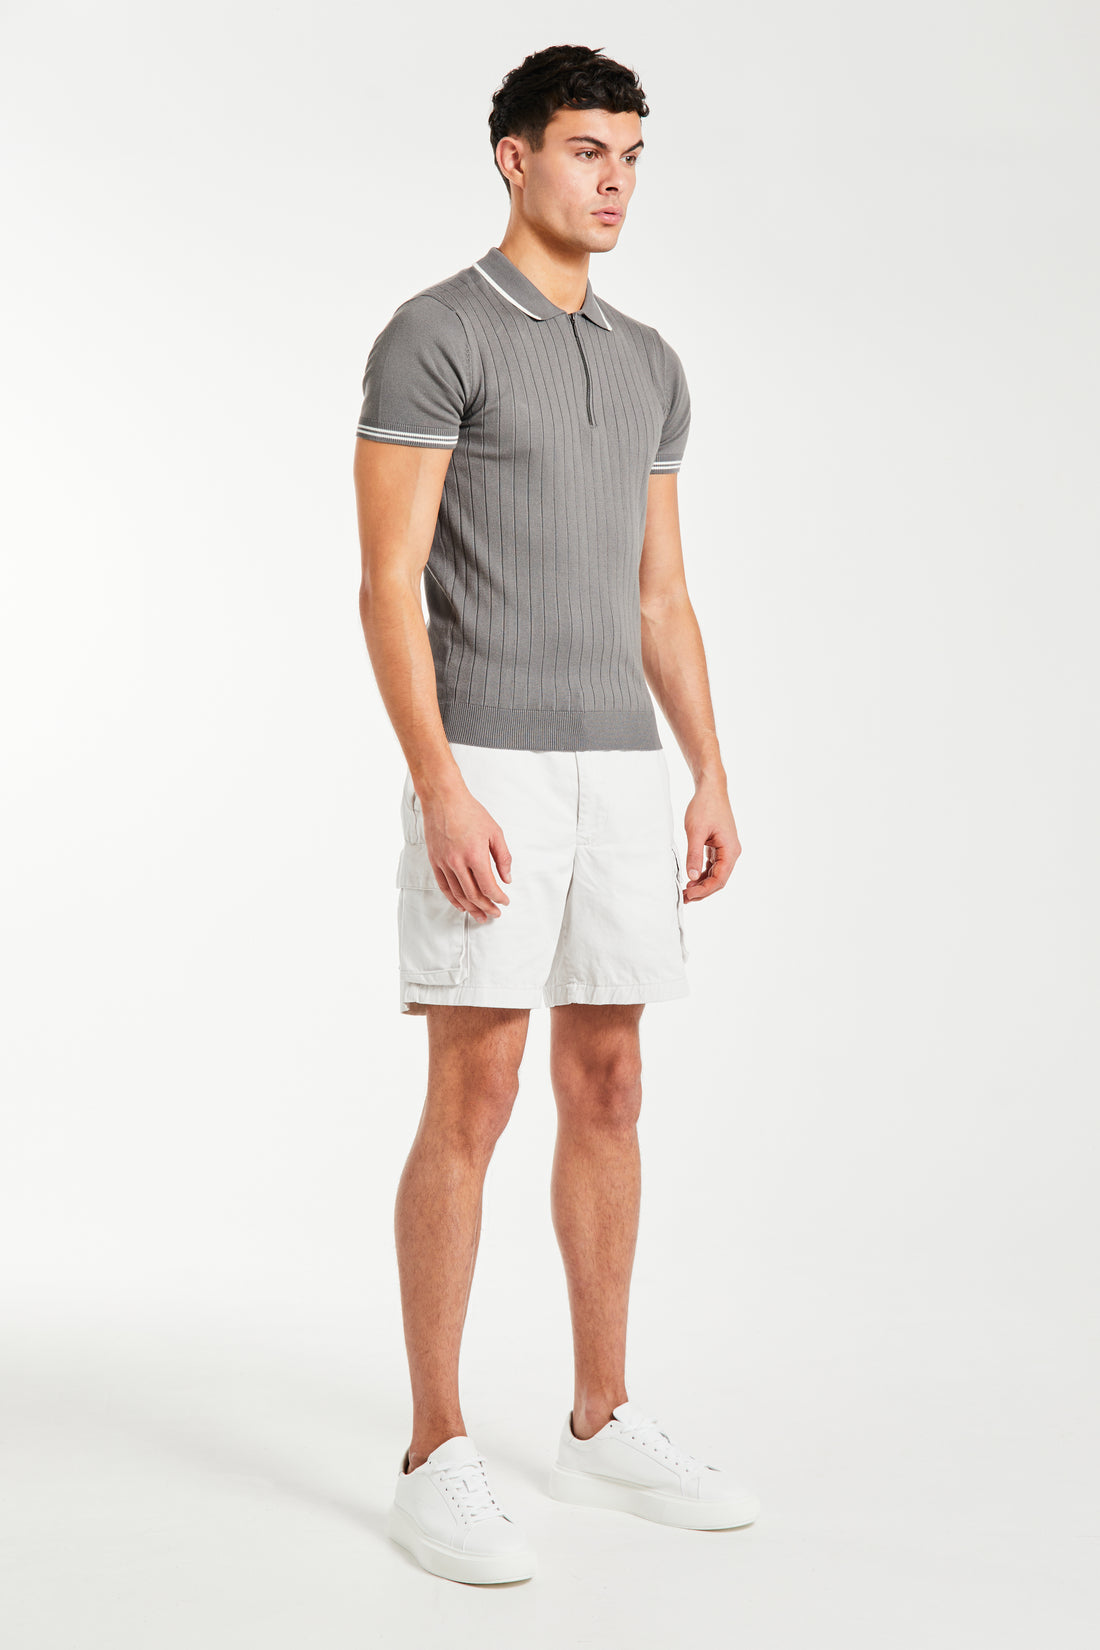 model wearing dark grey t-shirt sale with white shorts